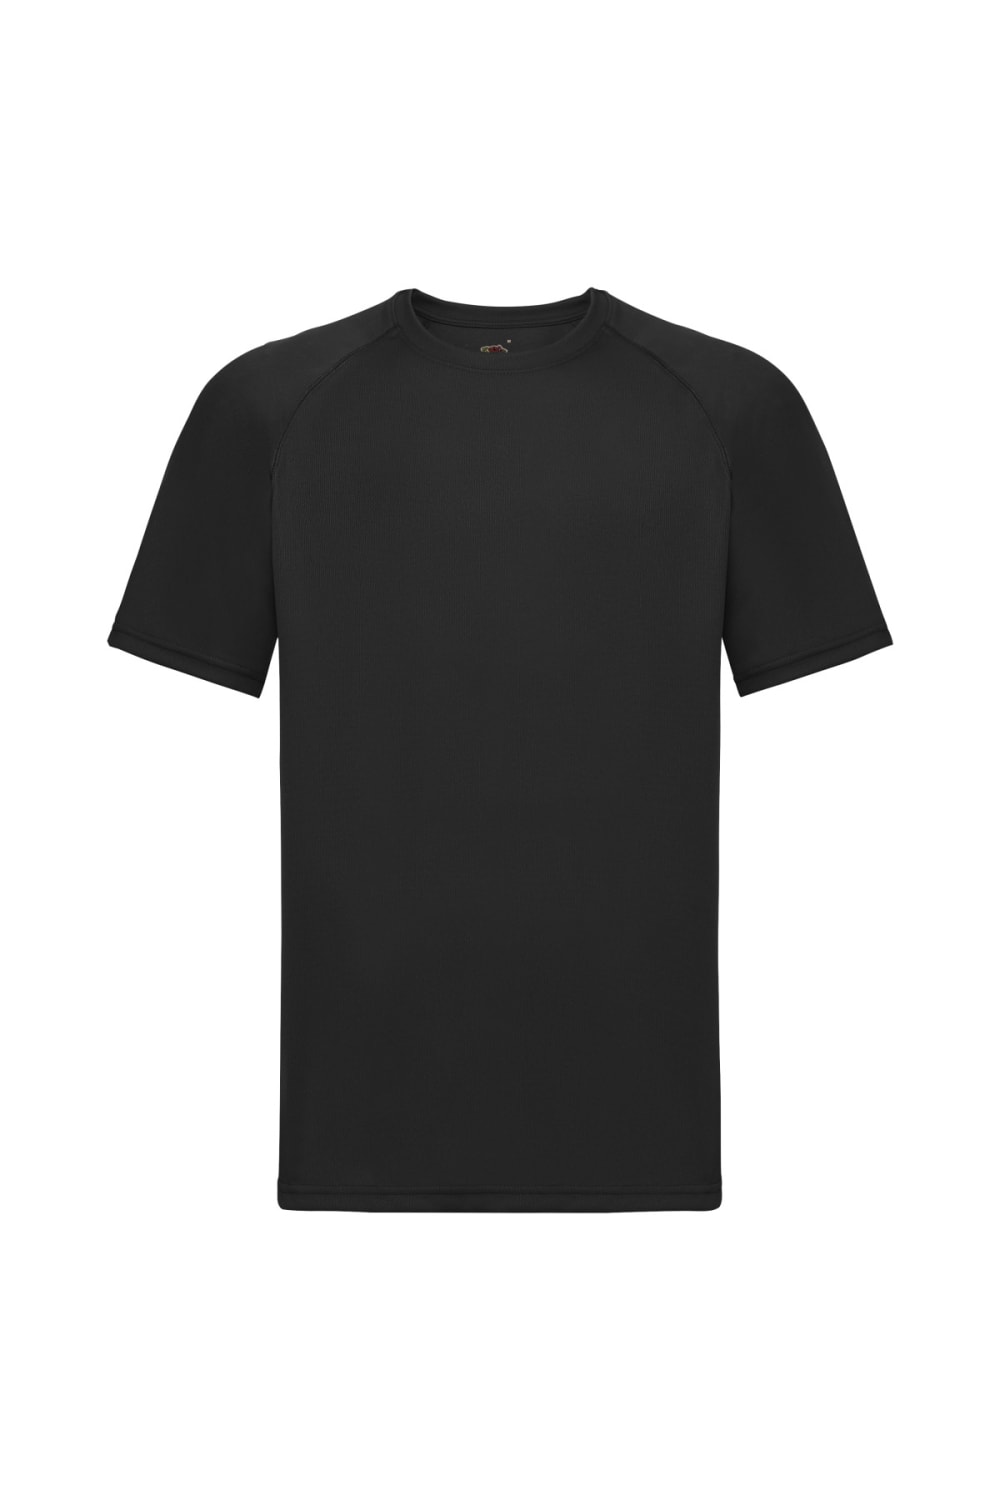 Fruit Of The Loom Mens Performance Sportswear T-Shirt (Black)